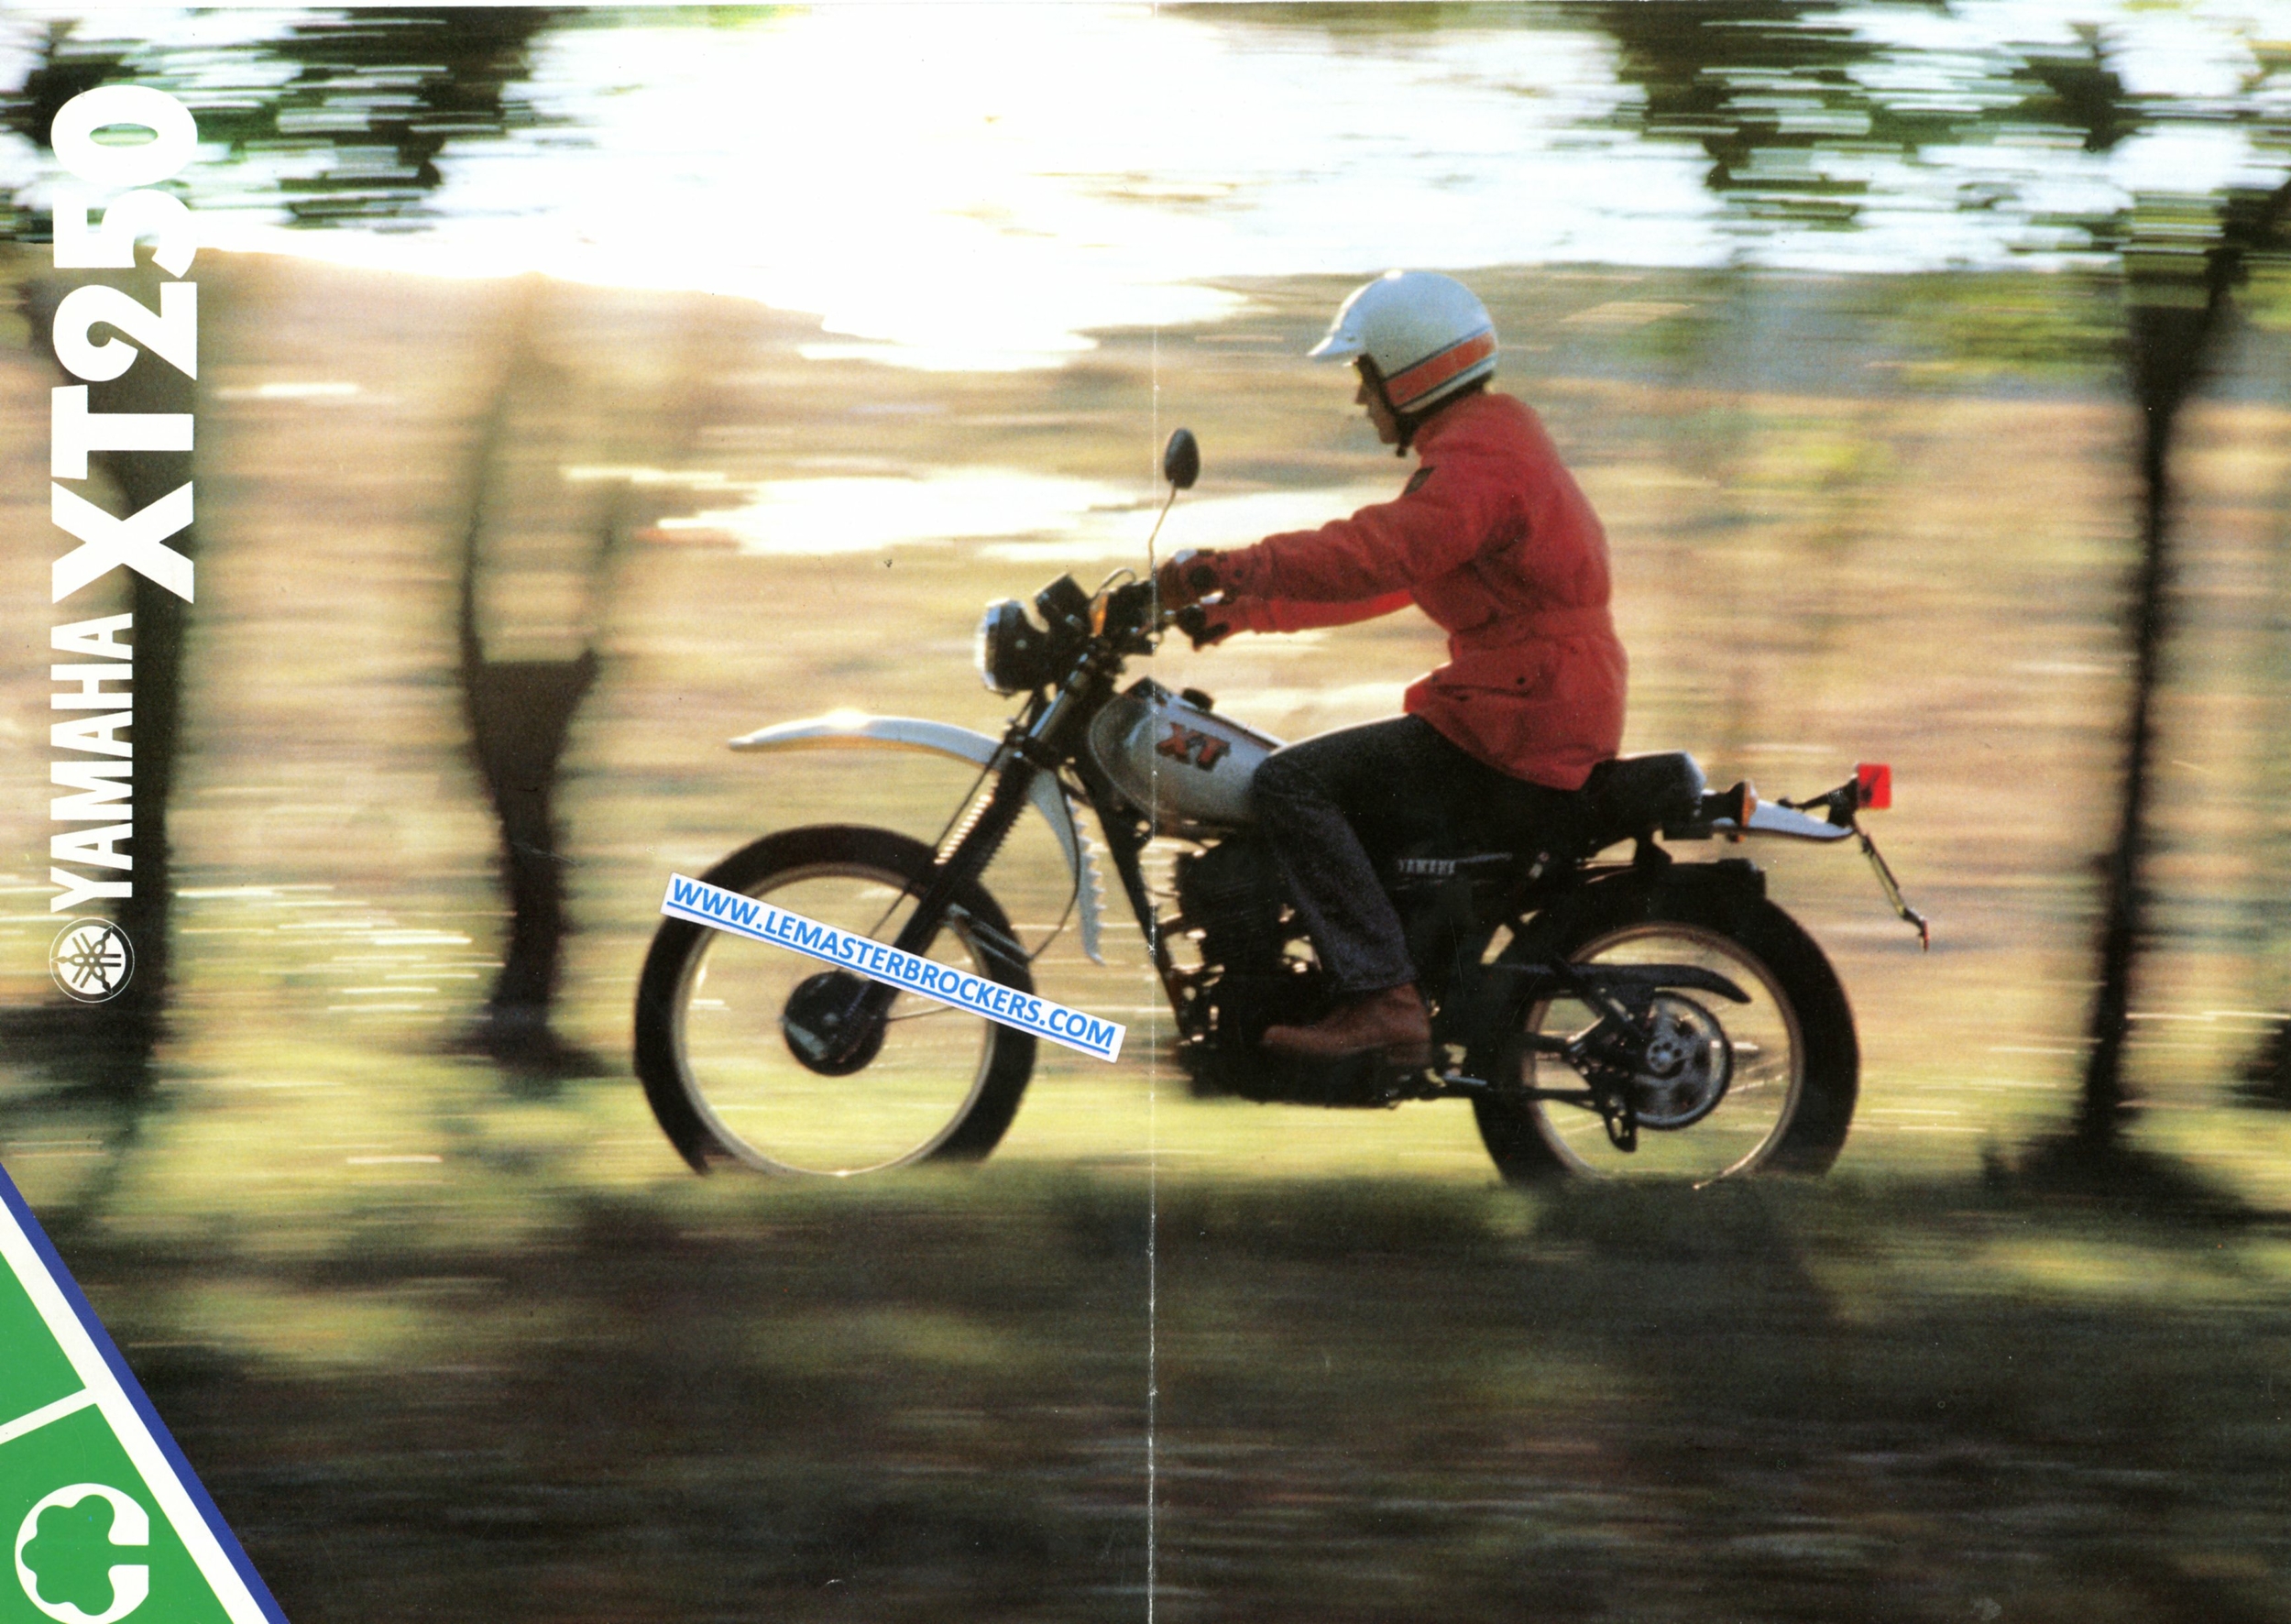 BROCHURE-MOTO-YAMAHA-XT-250-XT250-1981-LEMASTERBROCKERS-MOTORCYCLES